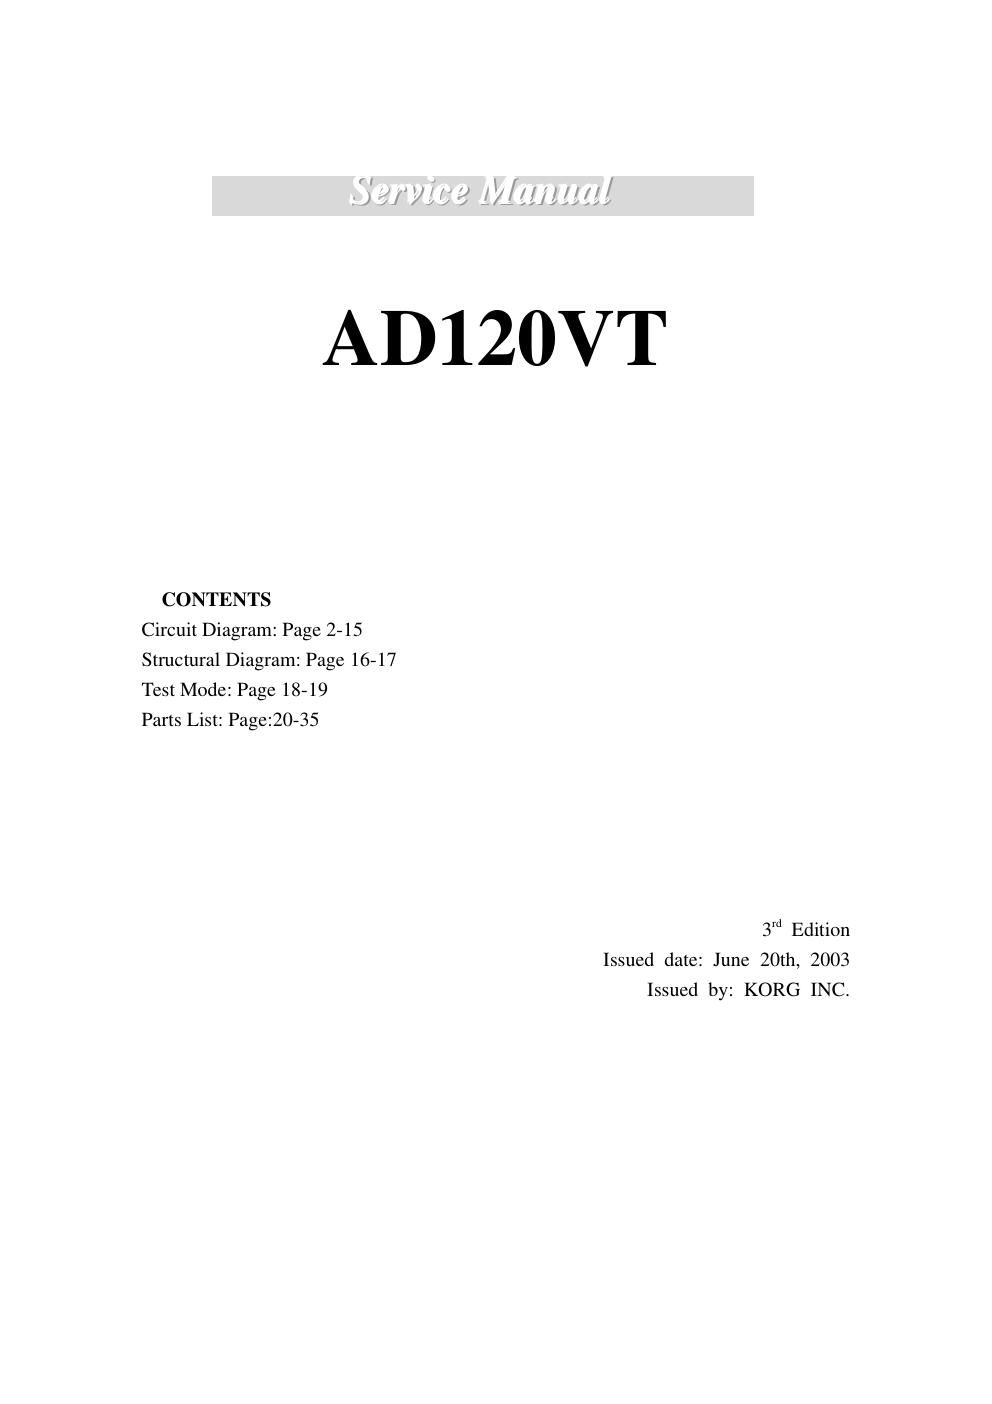 vox ad120vt service manual complete